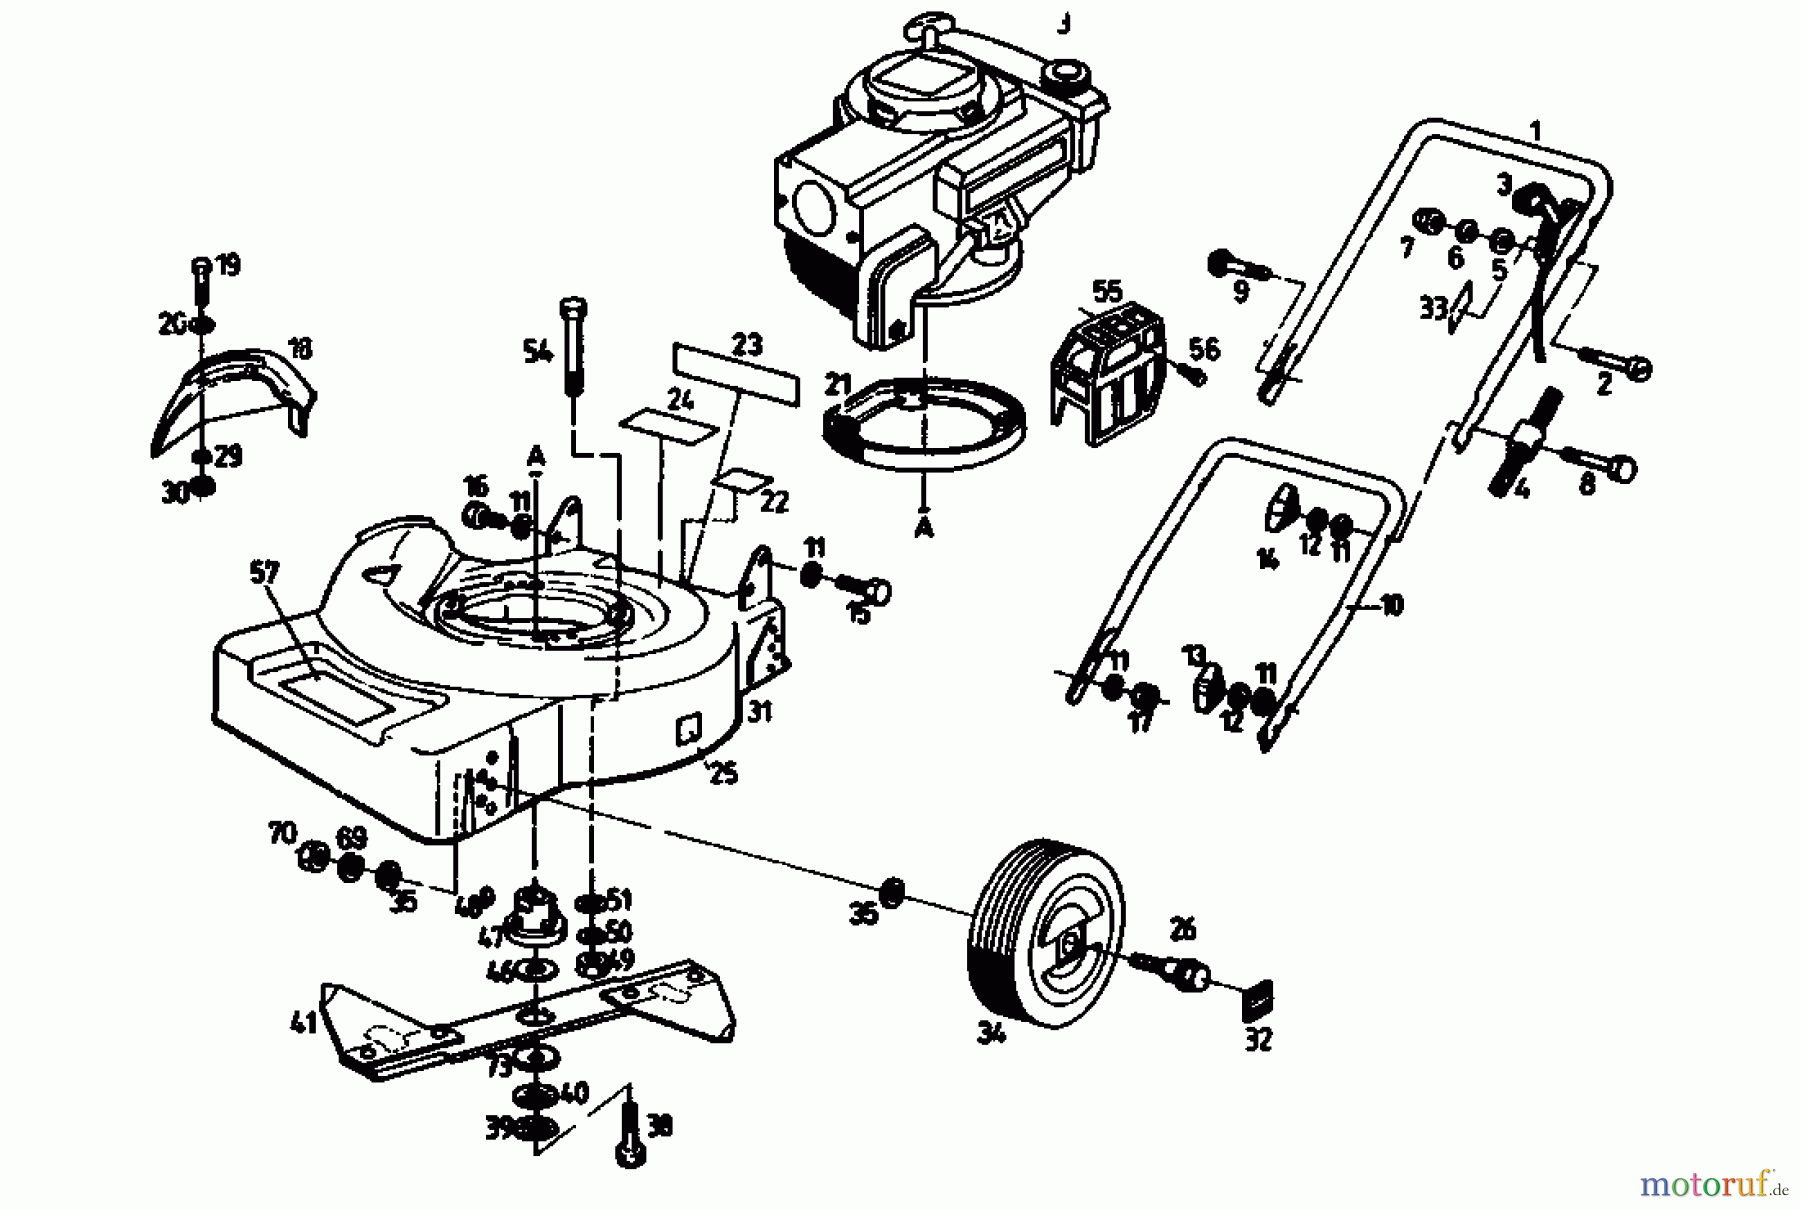  Golf Petrol mower 248 S 4 02670.01  (1992) Basic machine